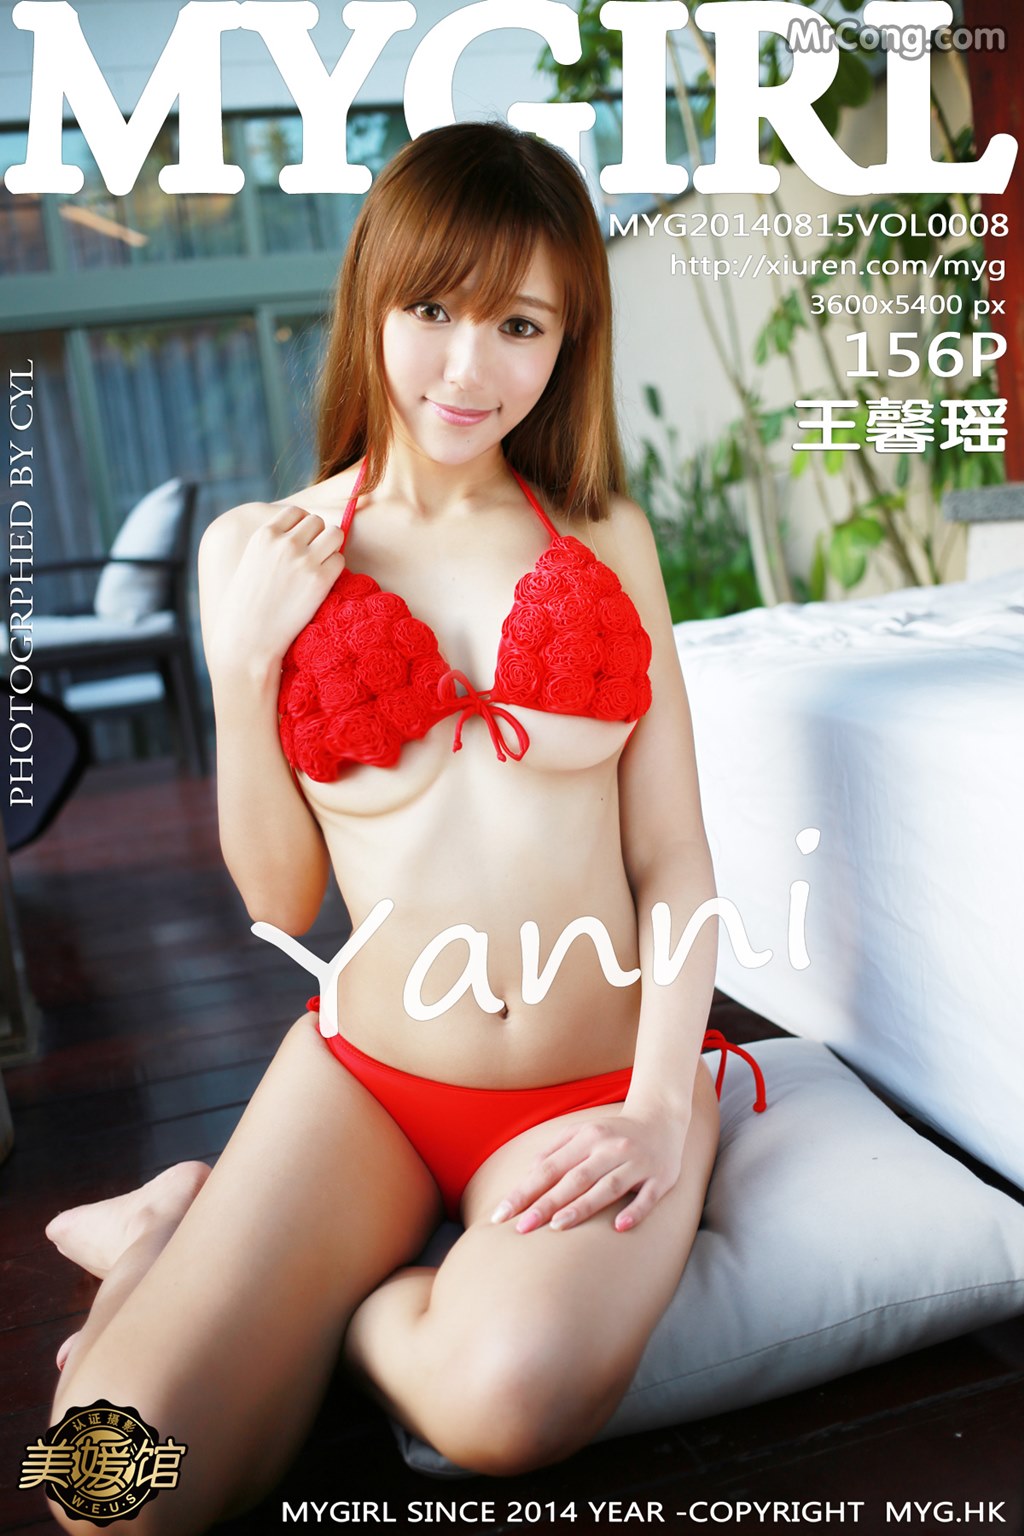 MyGirl Vol.008: Model Yanni (王馨瑶) (157 photos) photo 1-0